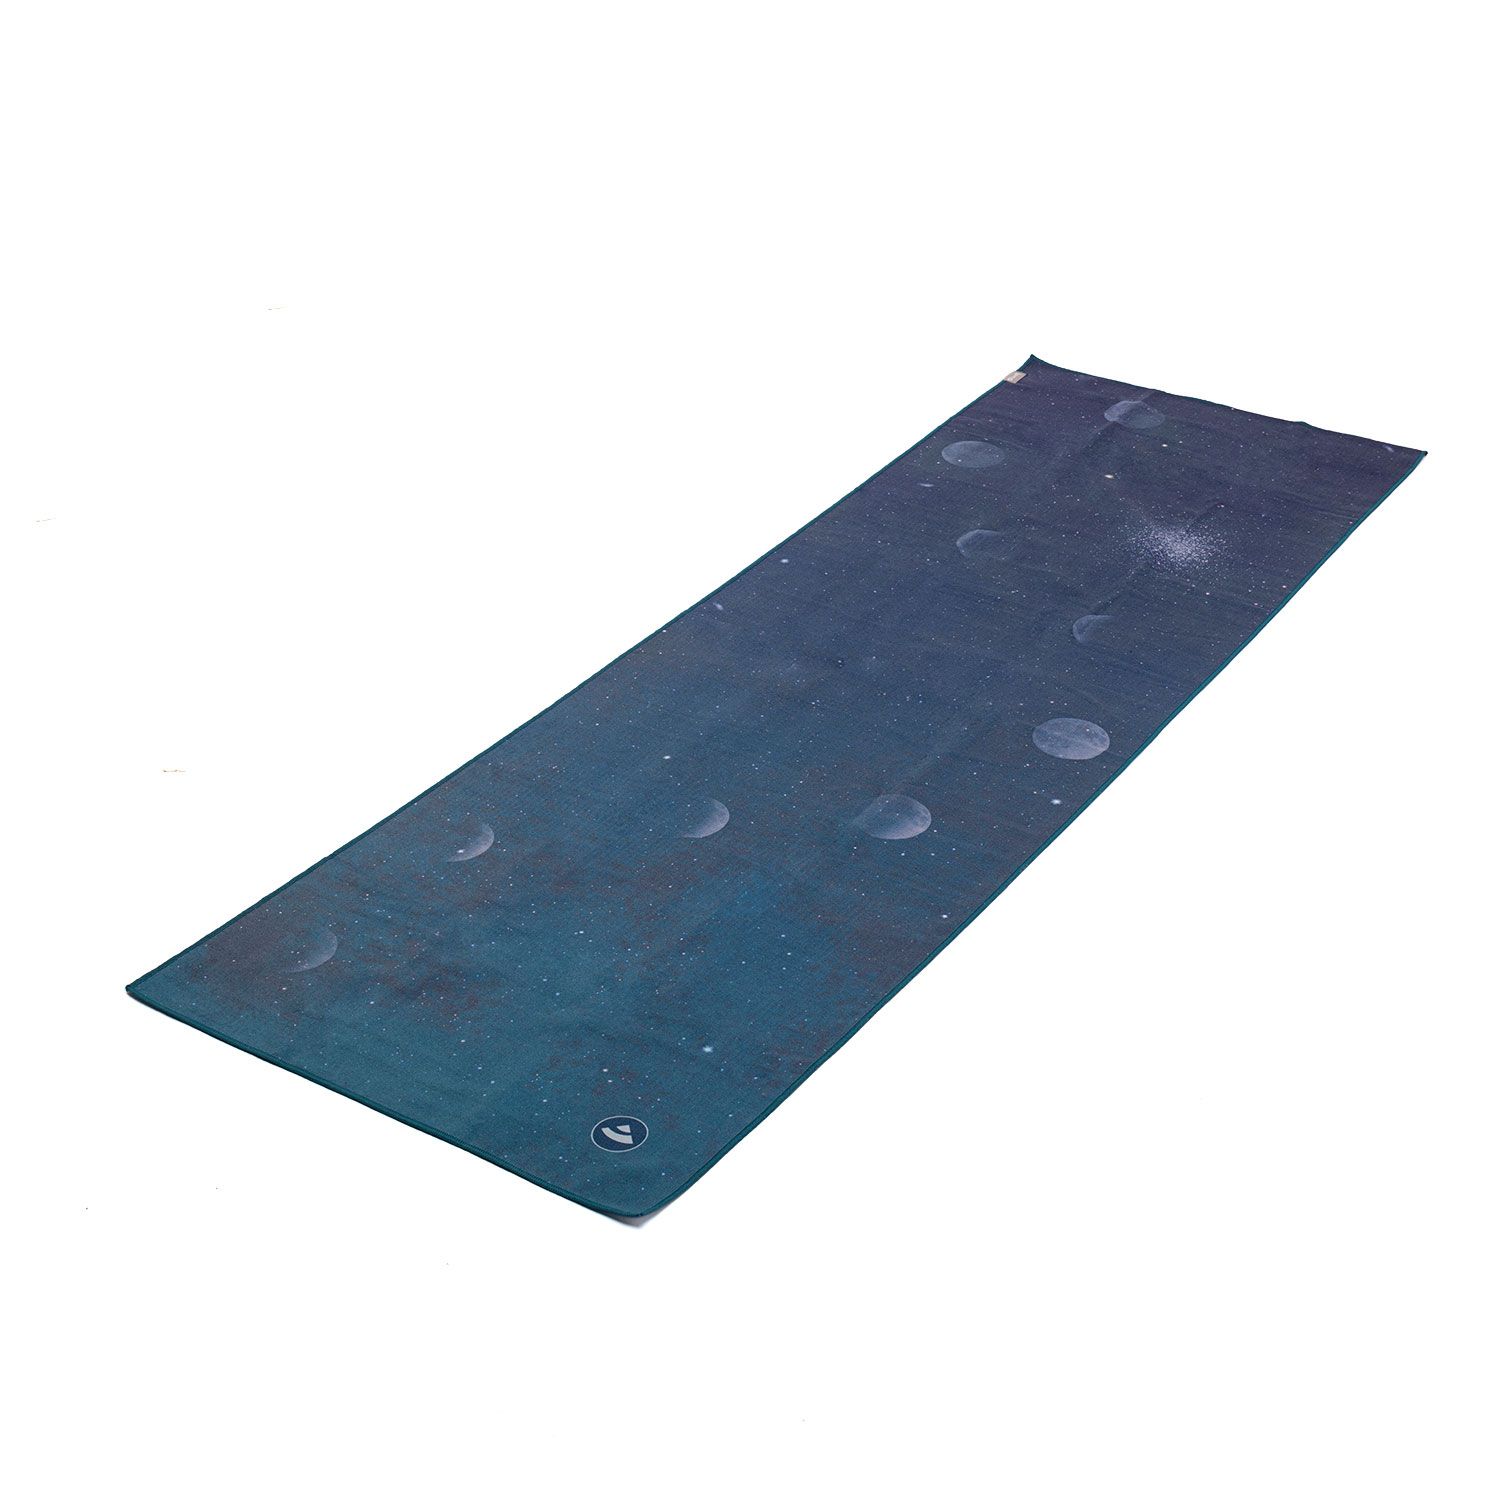 GRIP² Yoga Towel Art Collection, Dusty Moon, nightblue, 907ADM